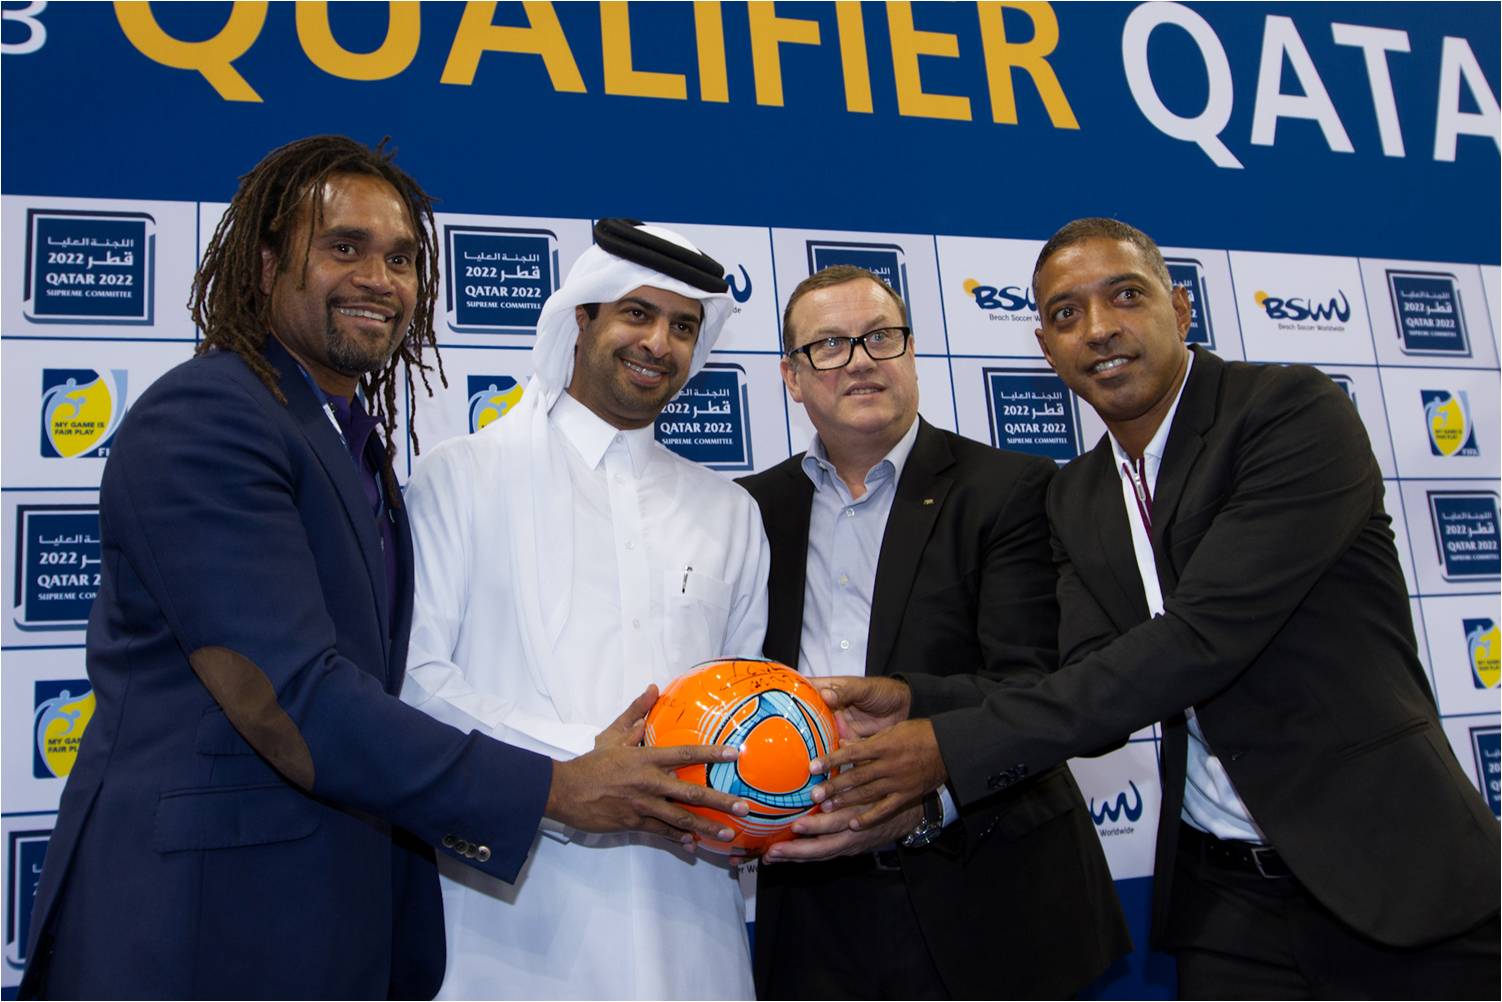 Qatar to host FIFA Beach Soccer World Cup